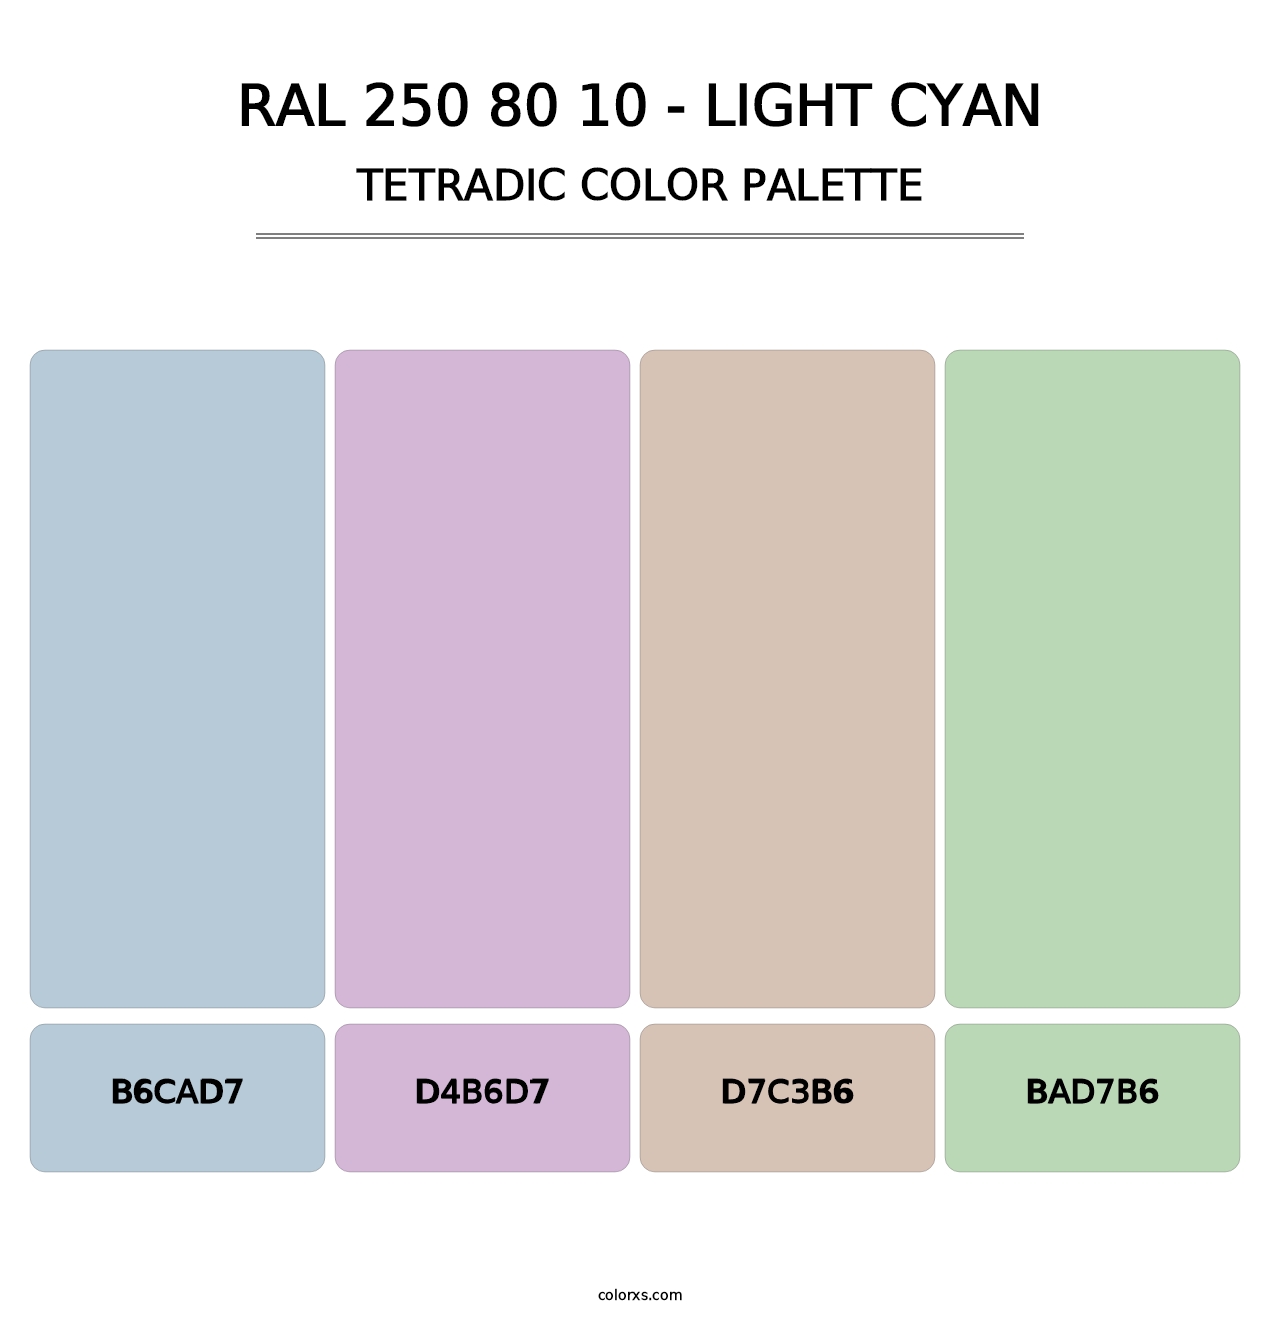 RAL 250 80 10 - Light Cyan - Tetradic Color Palette